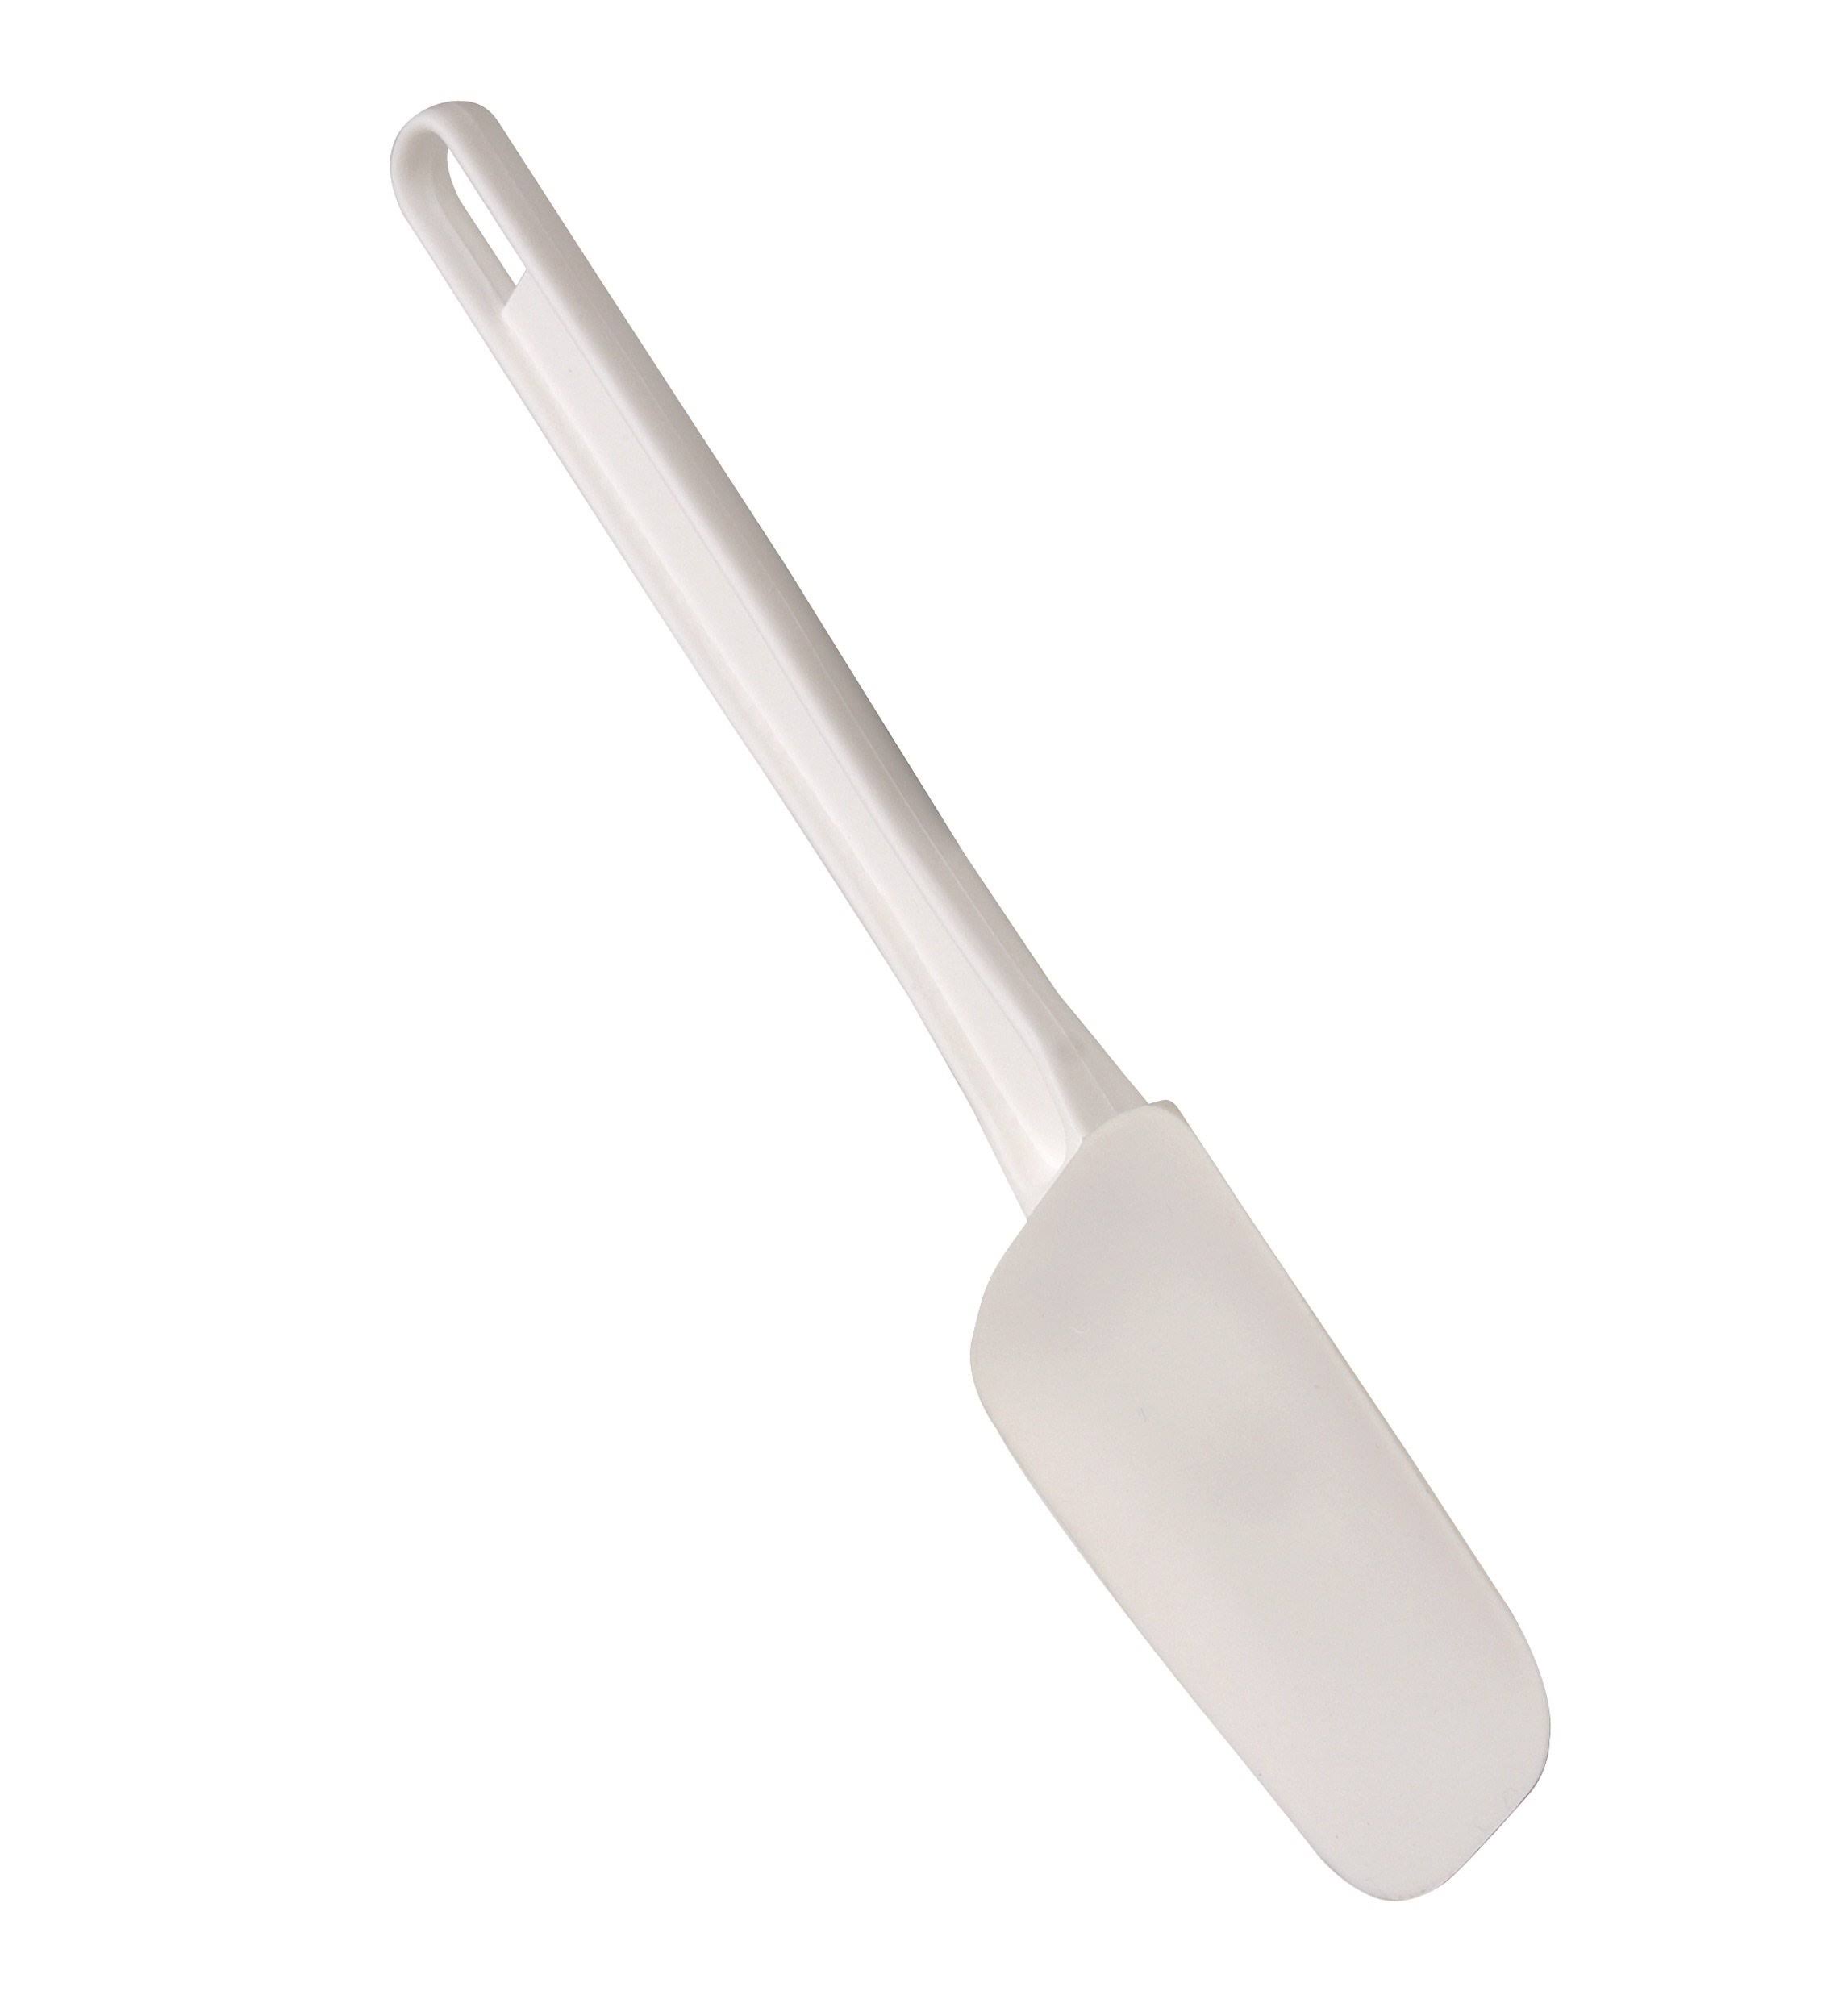 KitchenCraft Flexible Spoon Shaped Rubber Spatula